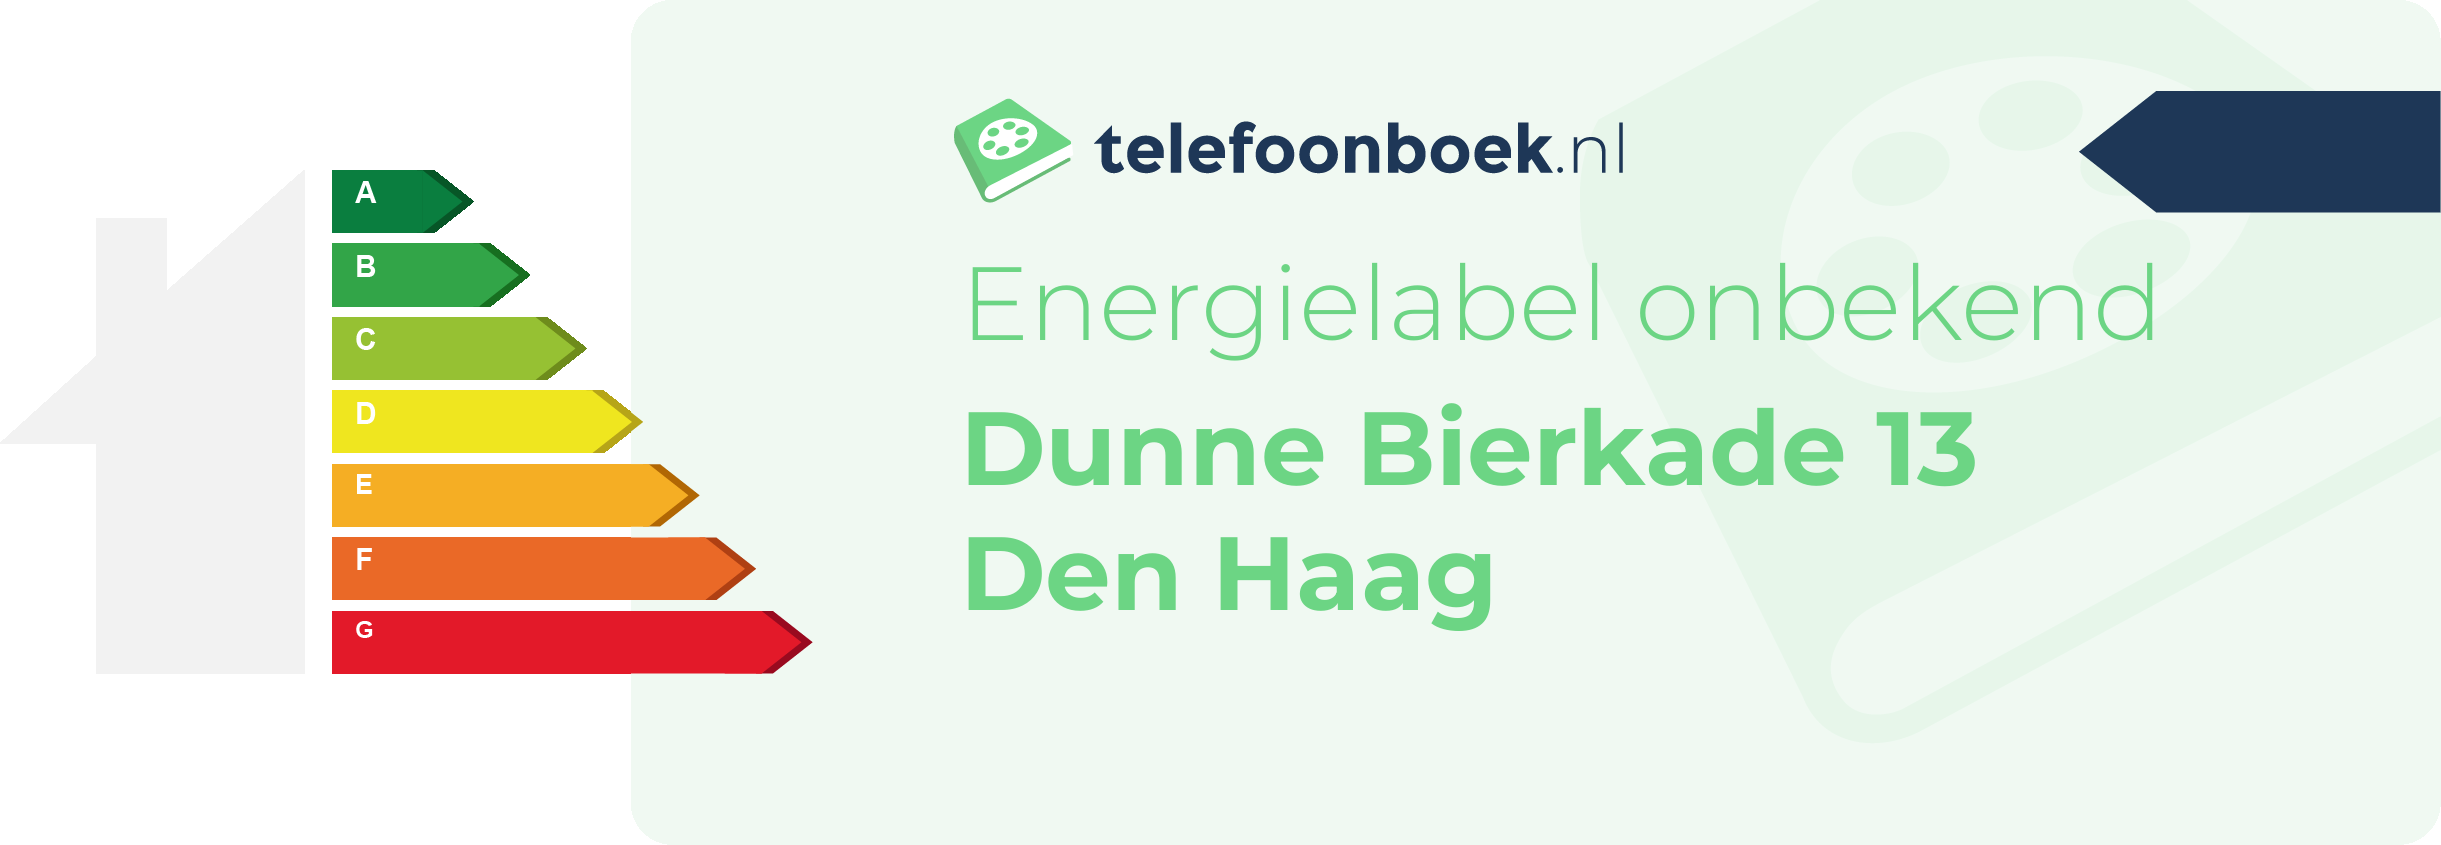 Energielabel Dunne Bierkade 13 Den Haag